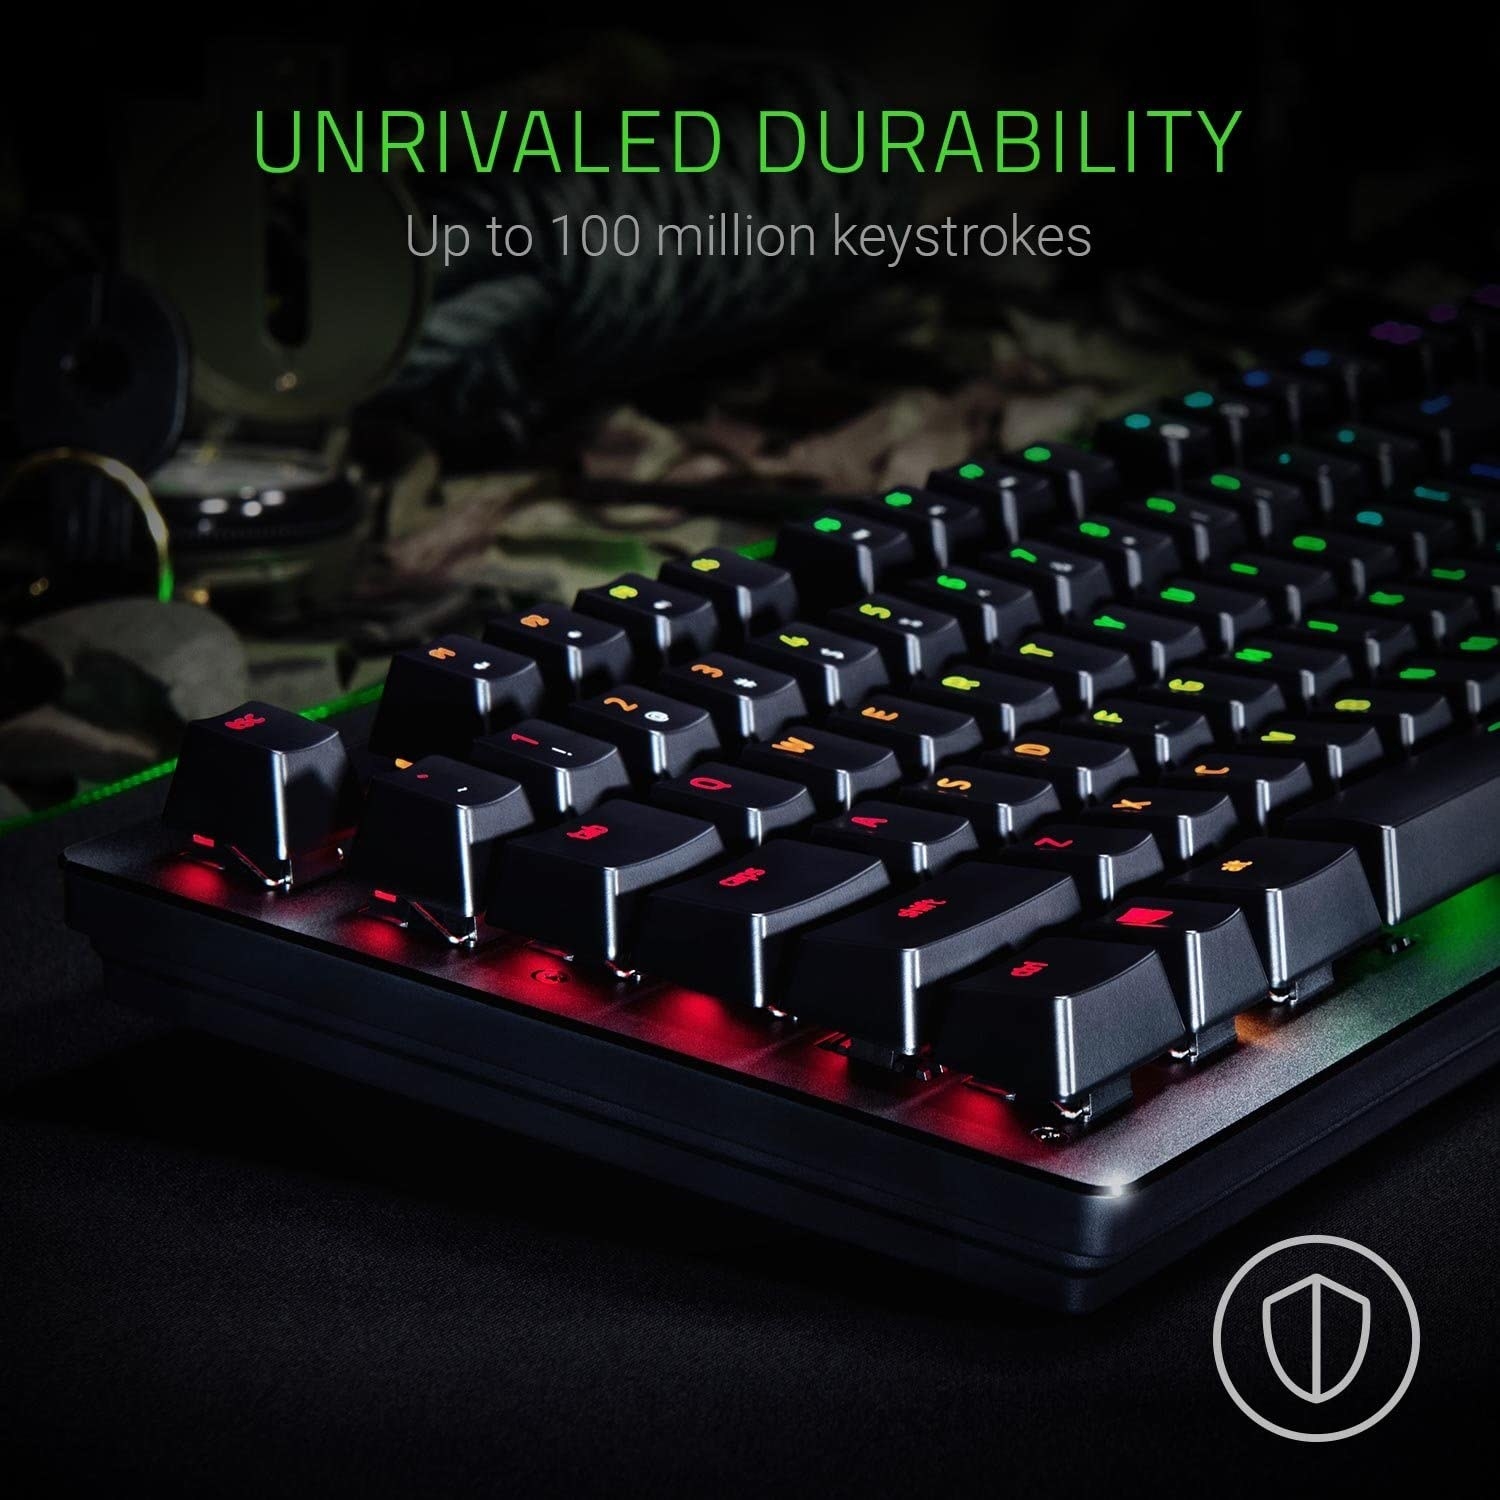 the black keyboard with rainbow backlighting